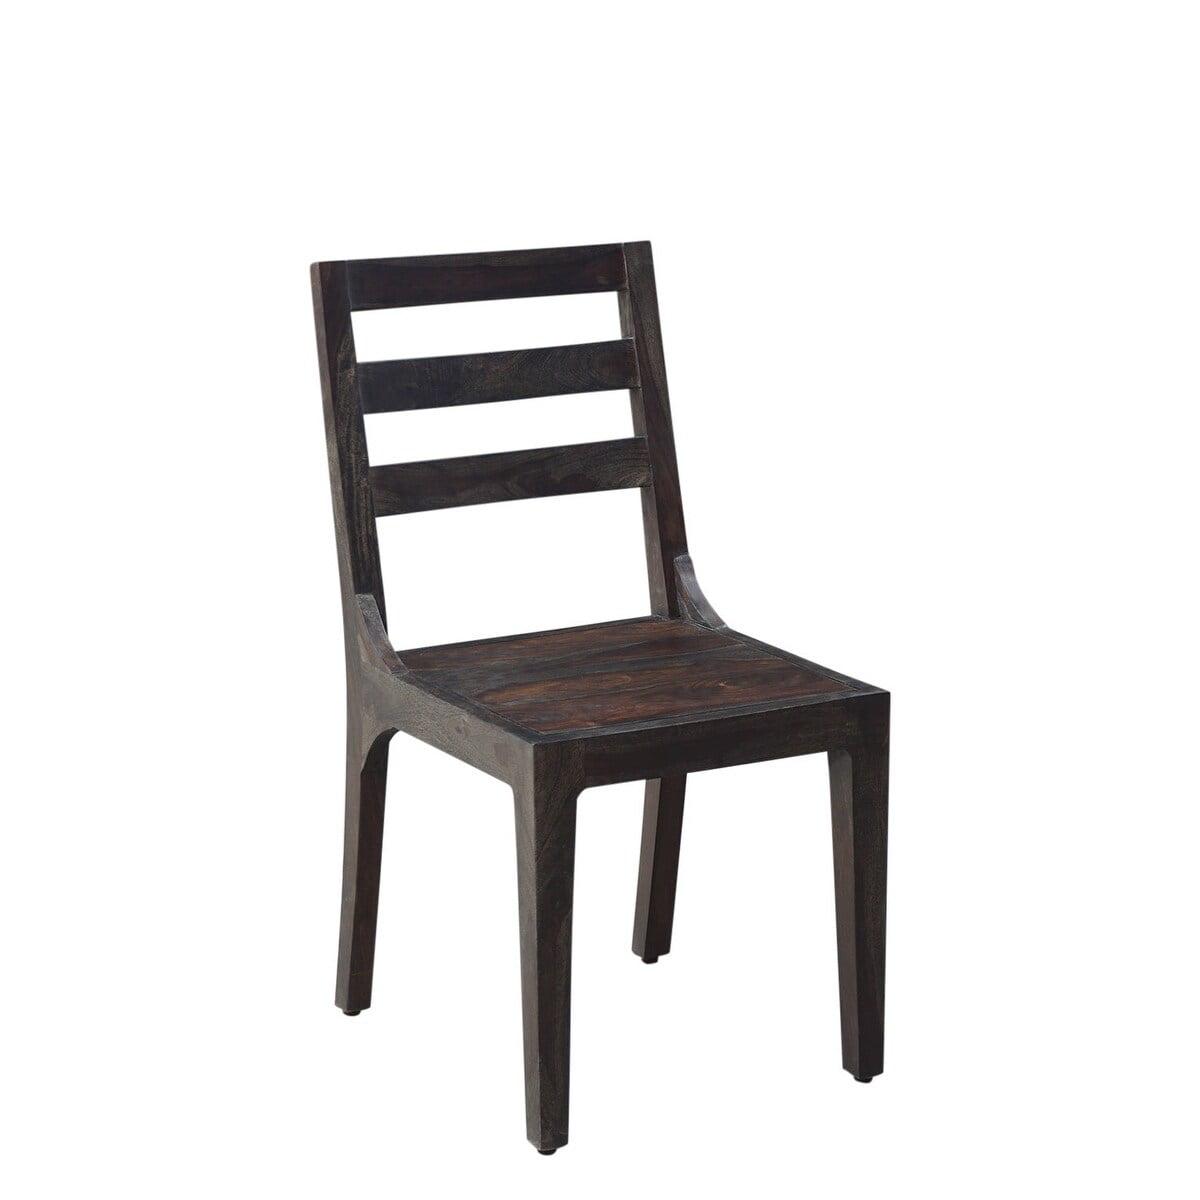 Elegant Black Wood Ladderback Side Chair with Slat Design